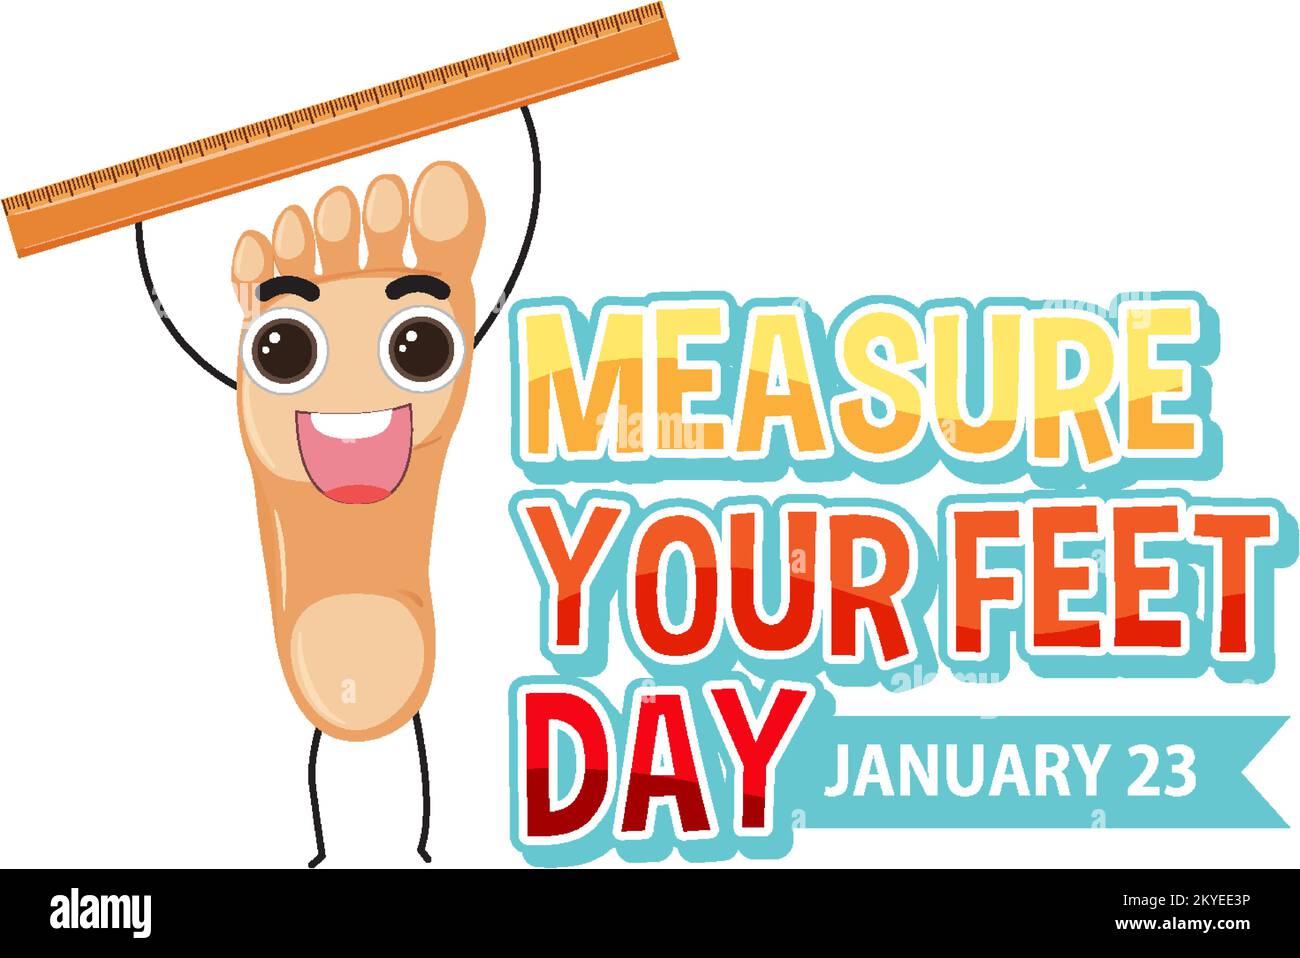 Measure your feet day banner design illustration Stock Vector